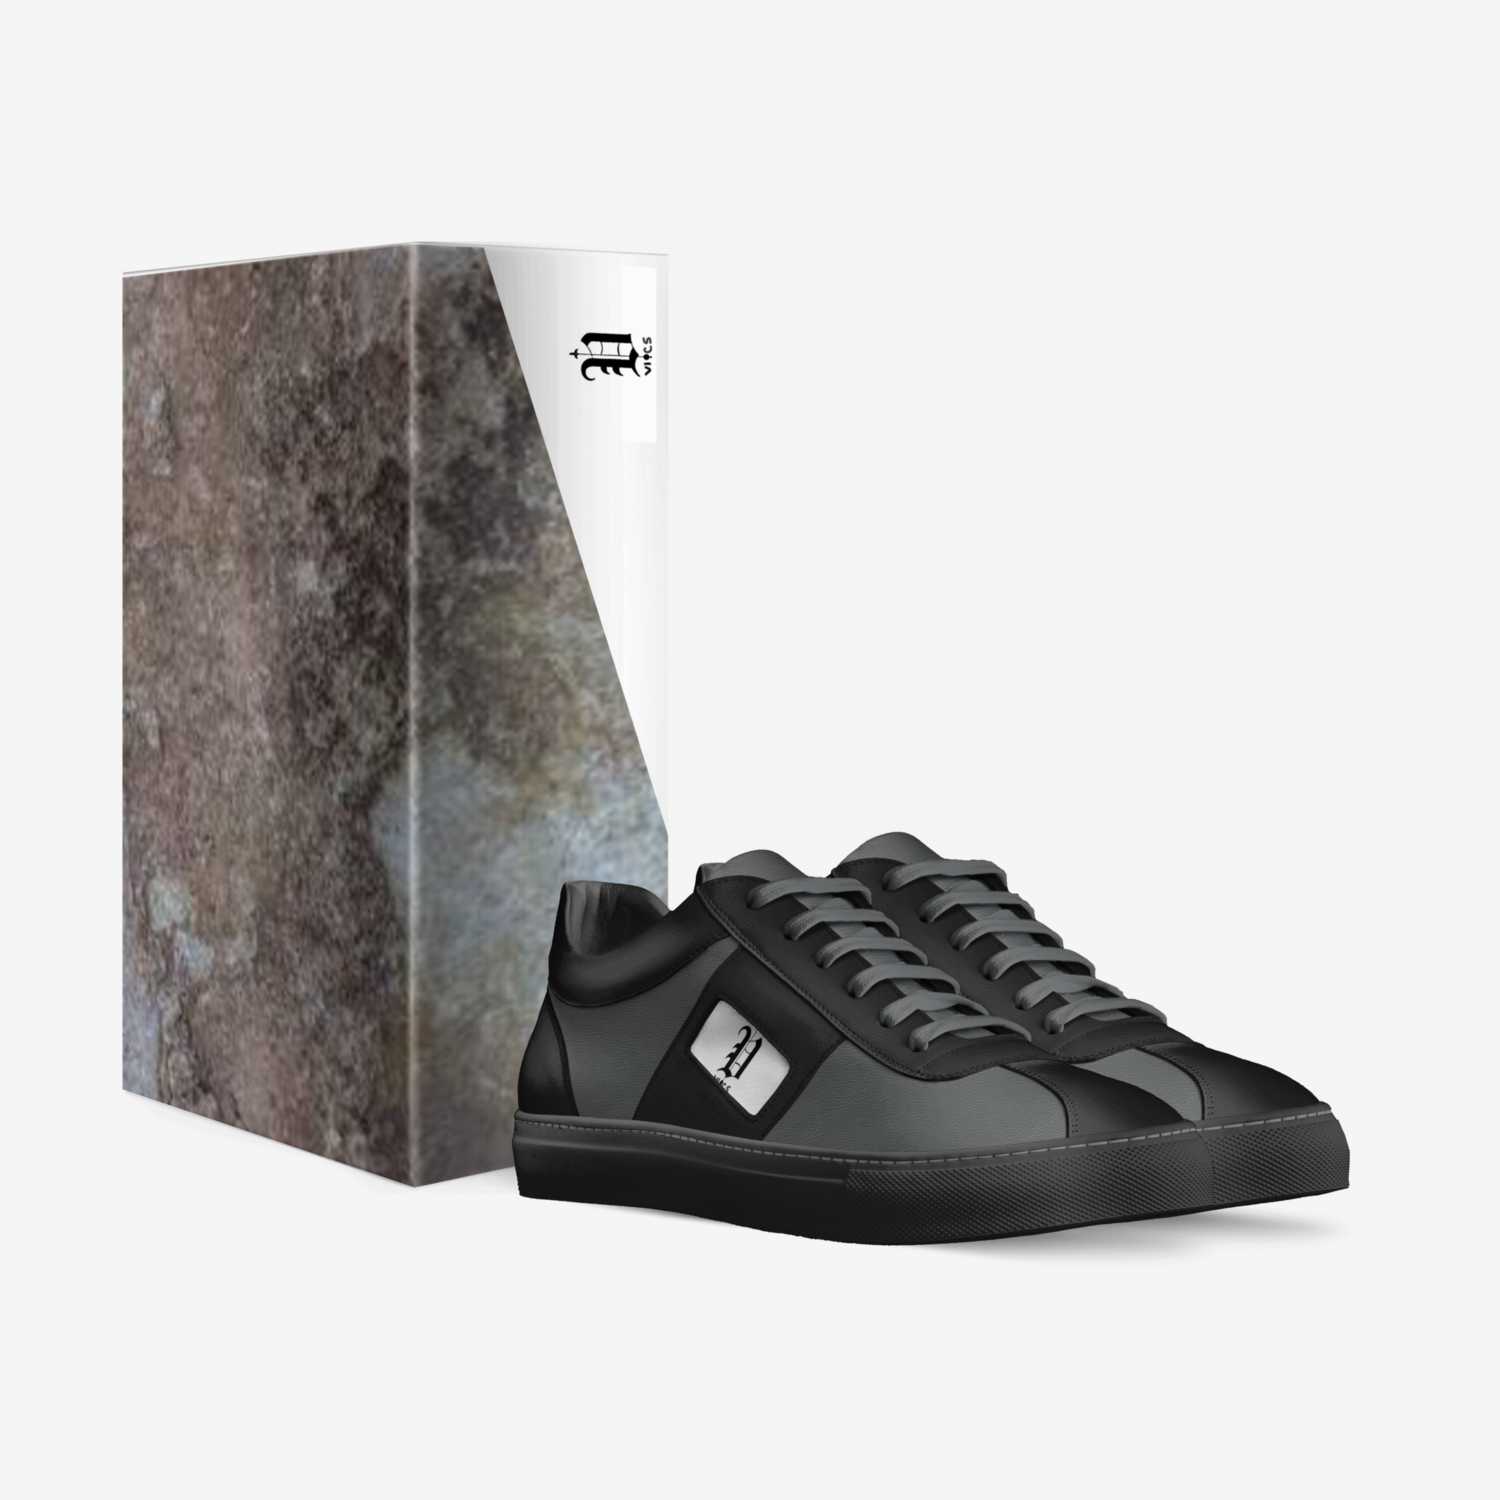 vics targa custom made in Italy shoes by Brayden Murphy | Box view